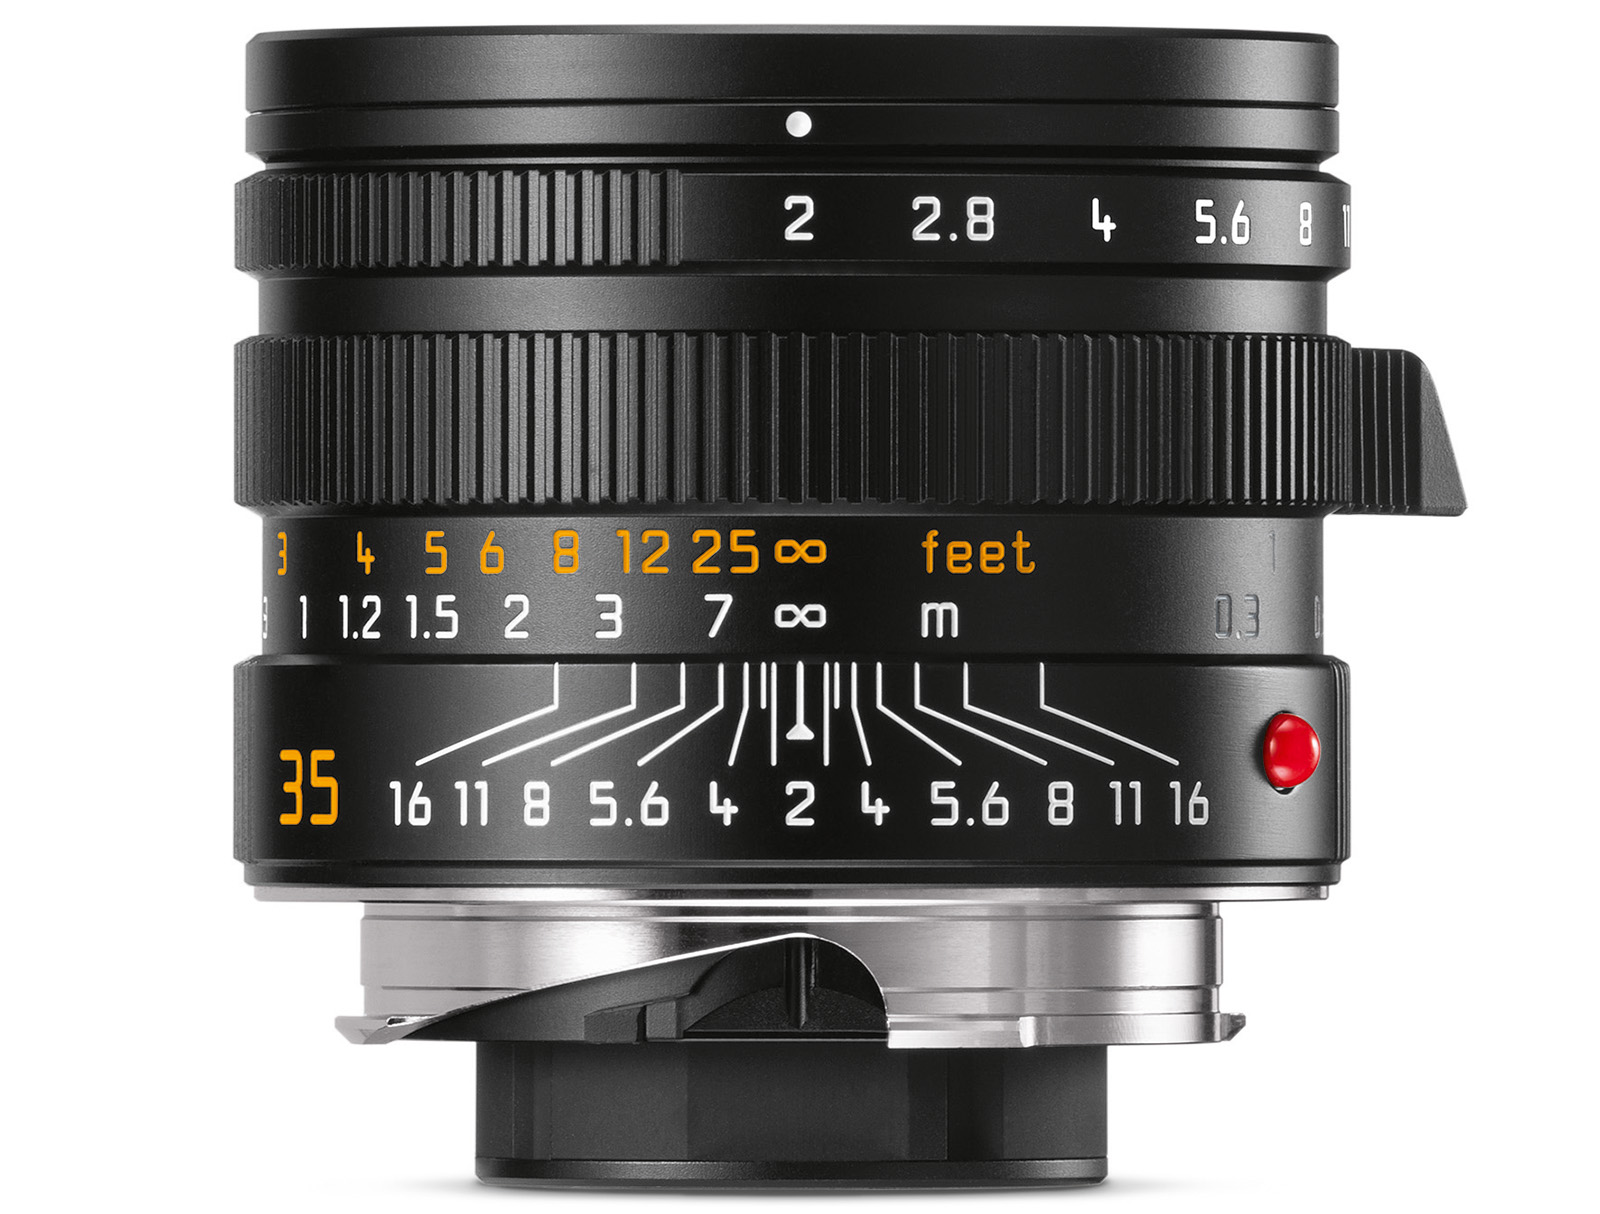 Leica ra mắt ống kính APO Summicron-M 35mm F2 ASPH